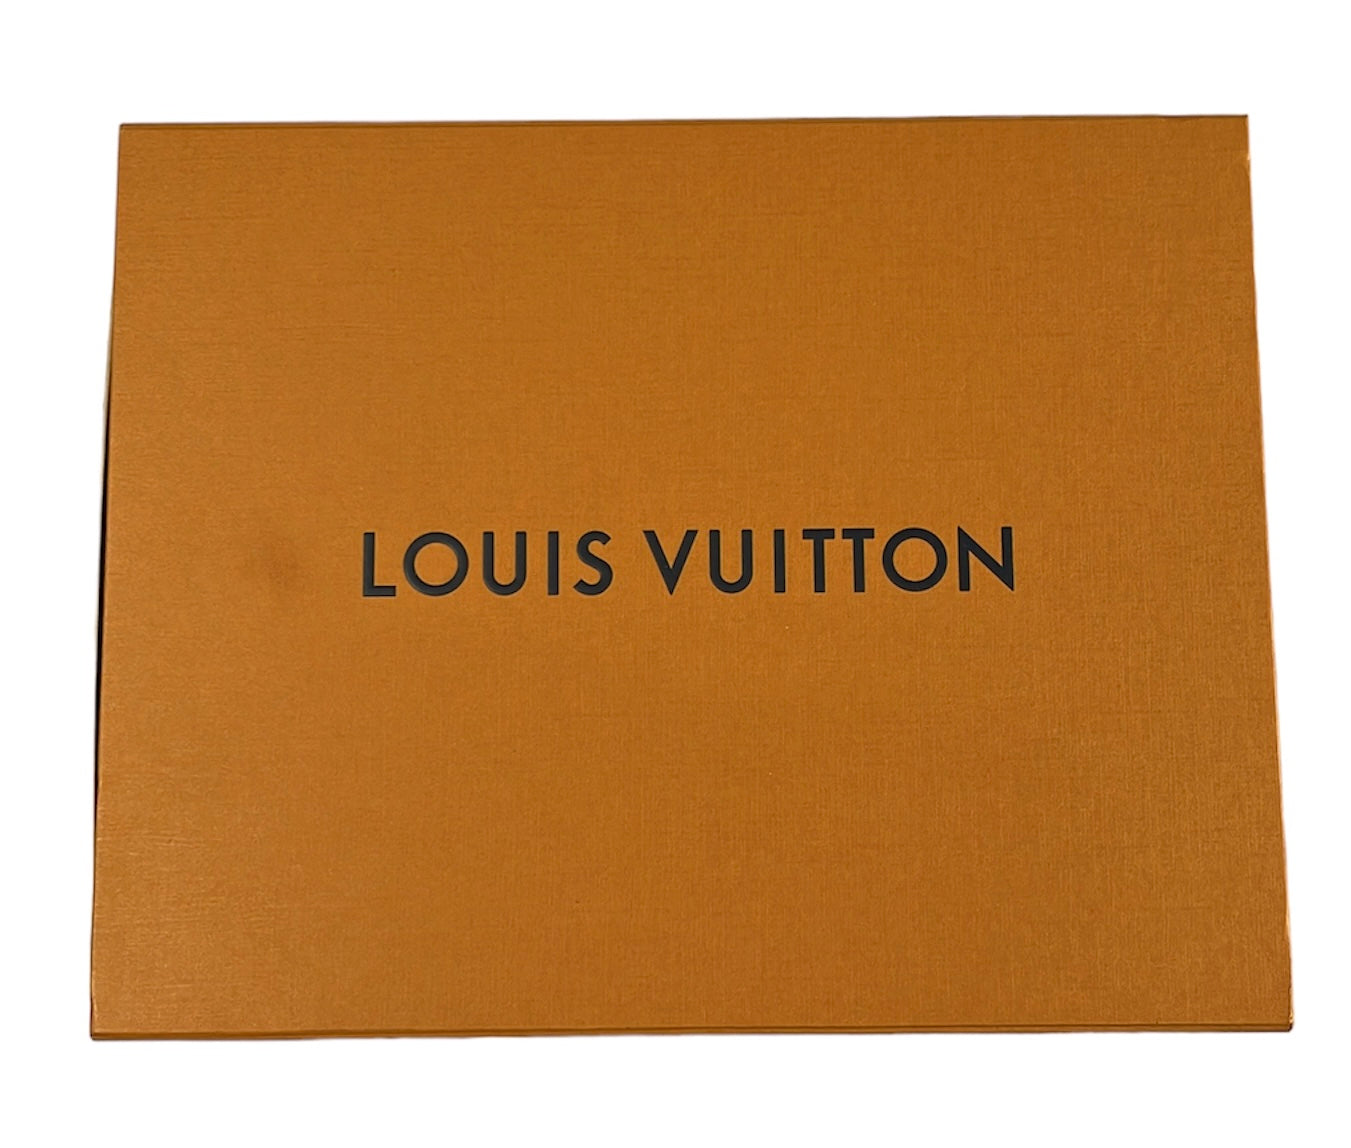 2020 Louis Vuitton trainers (9)